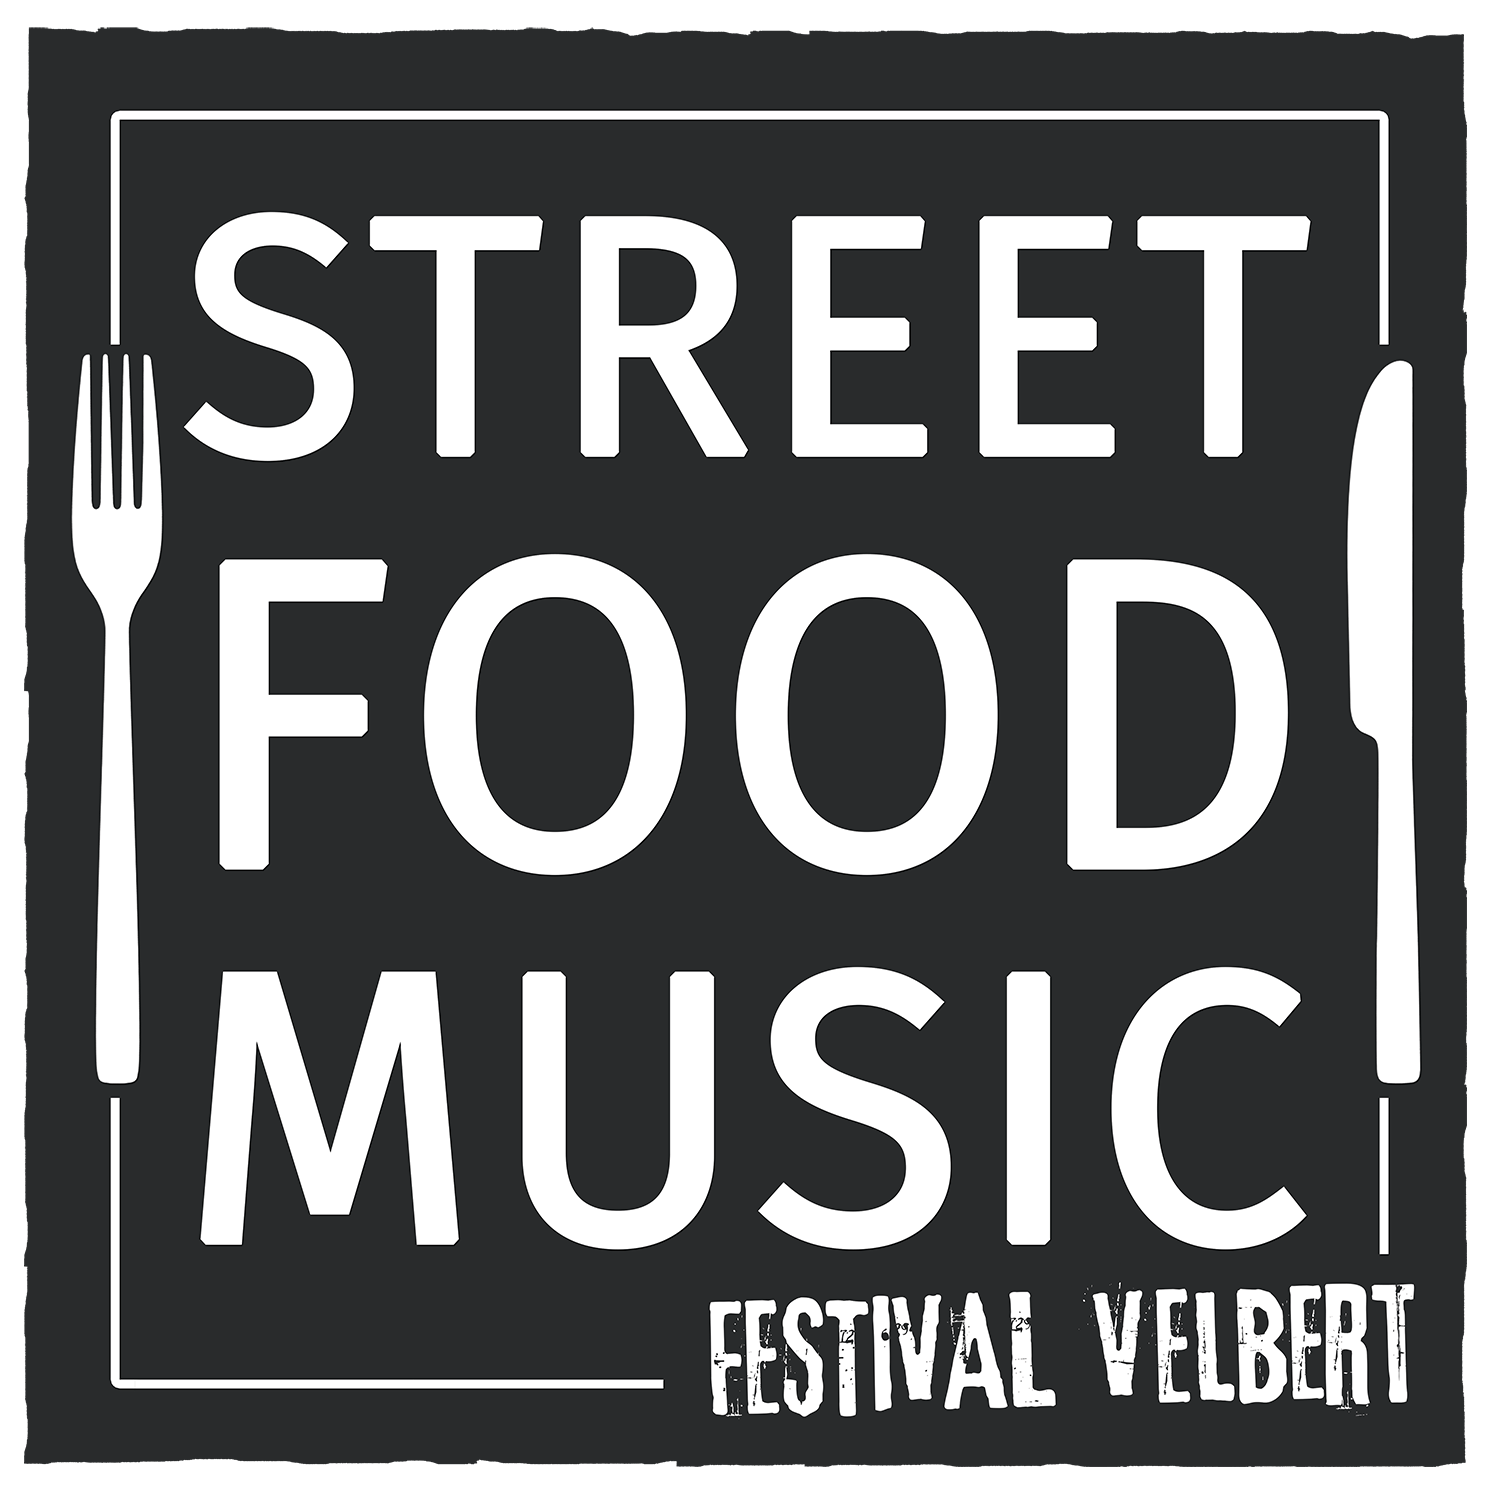 Street Food & Music Festival Velbert